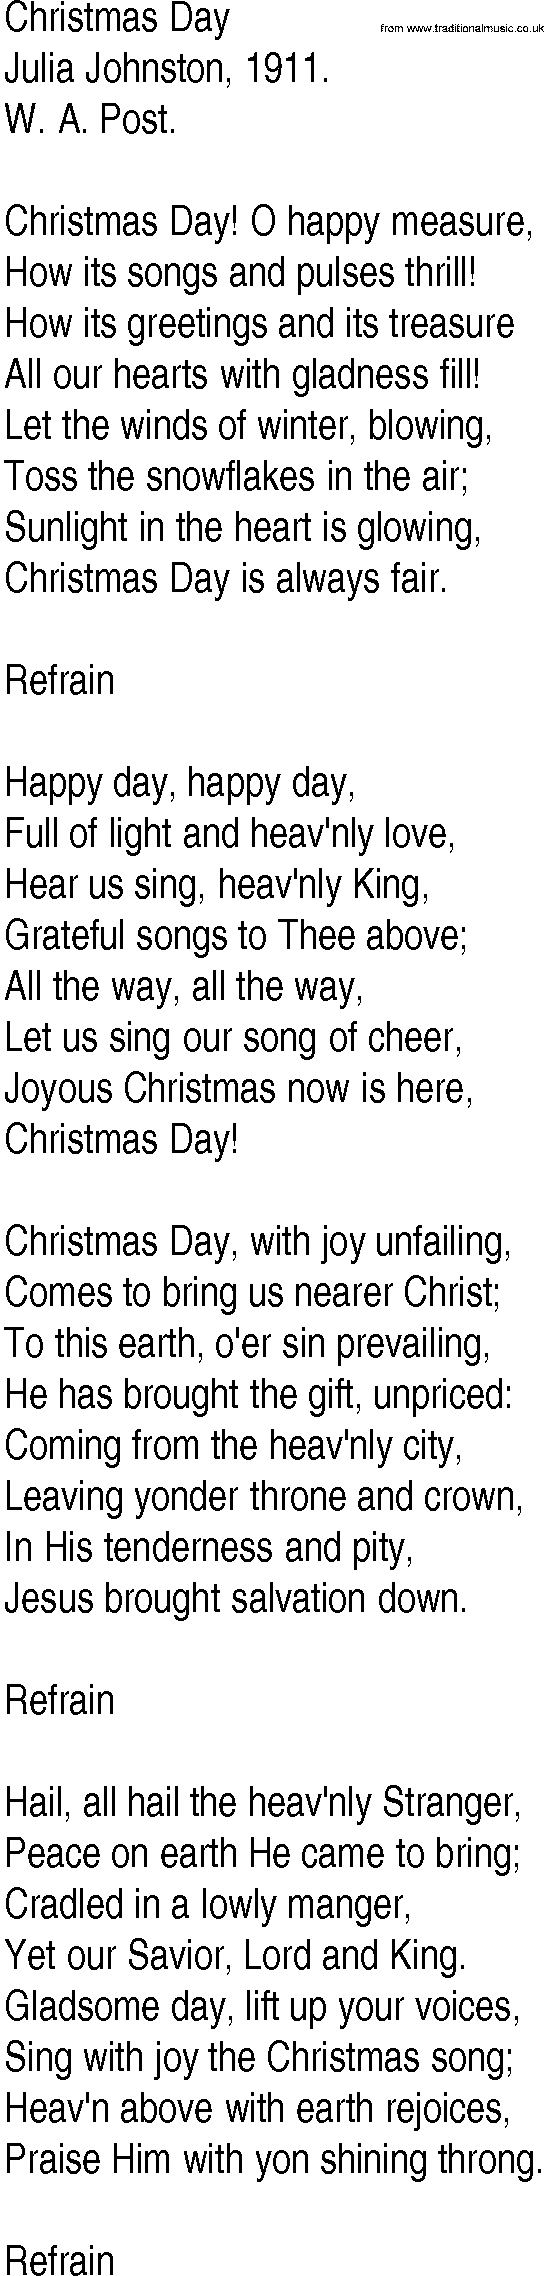 Hymn and Gospel Song: Christmas Day by Julia Johnston lyrics